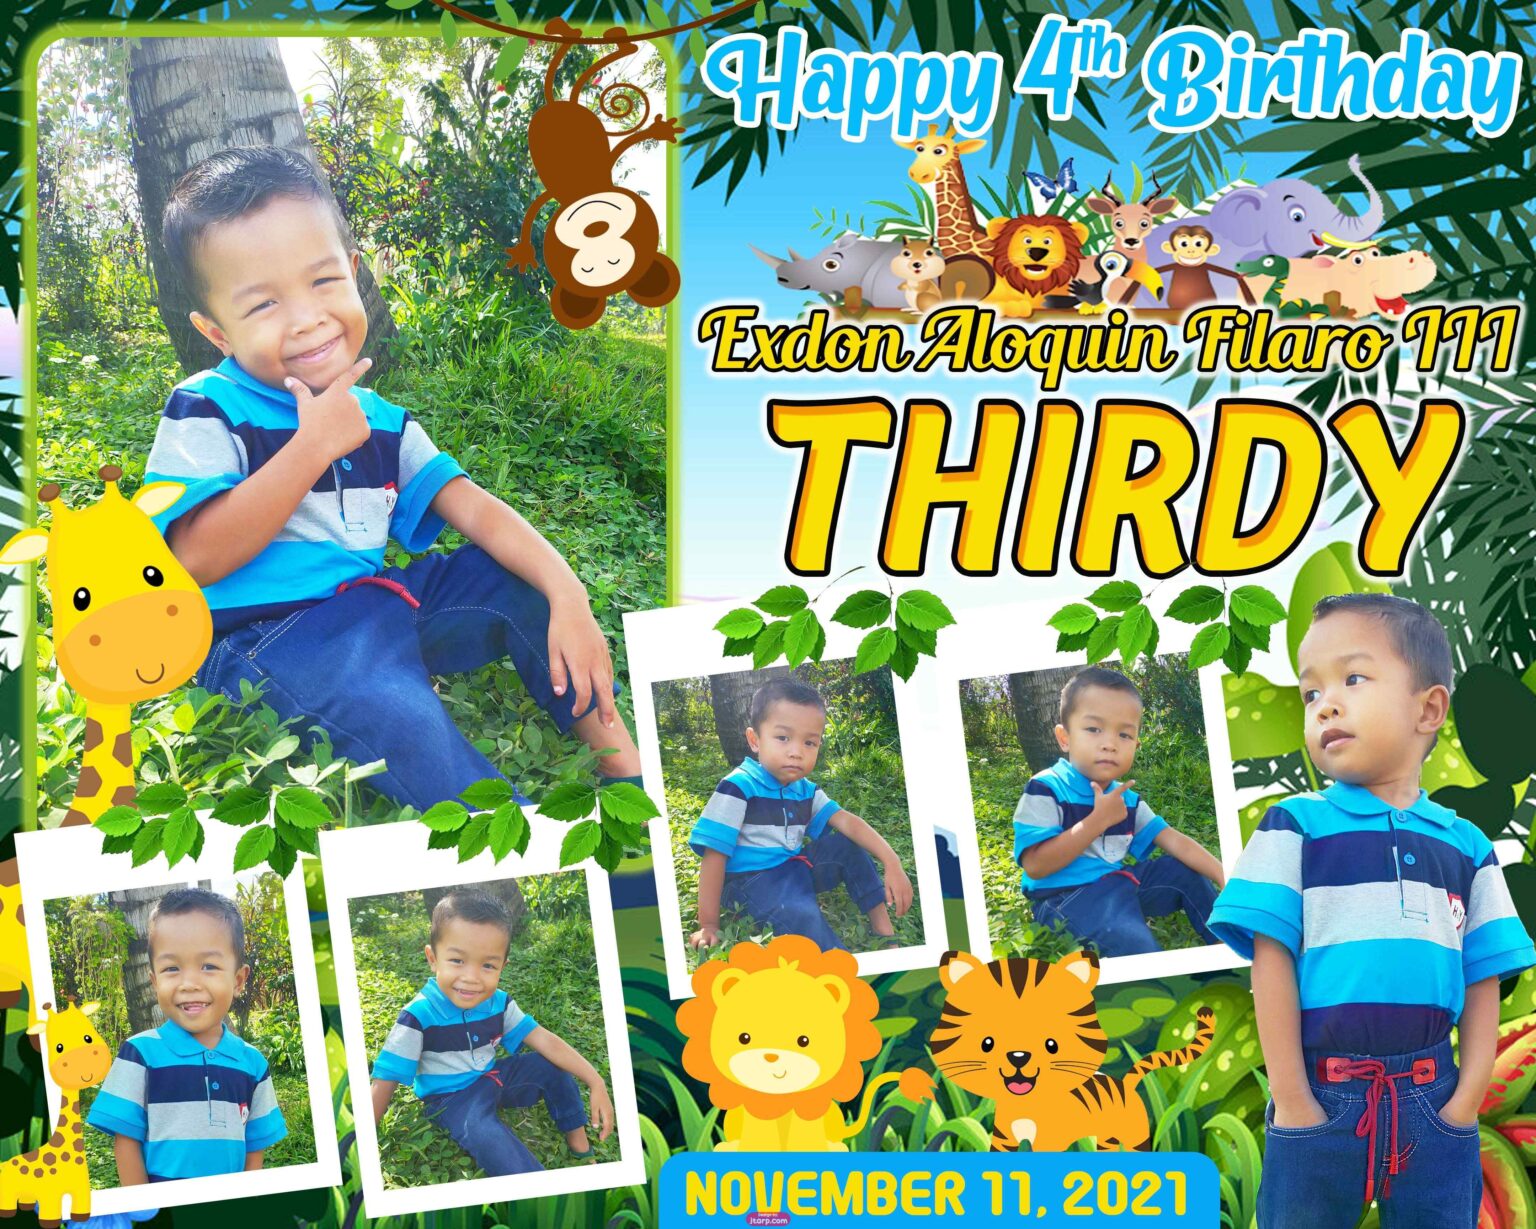 4x5 Exdon Thirdy 4th Birthday